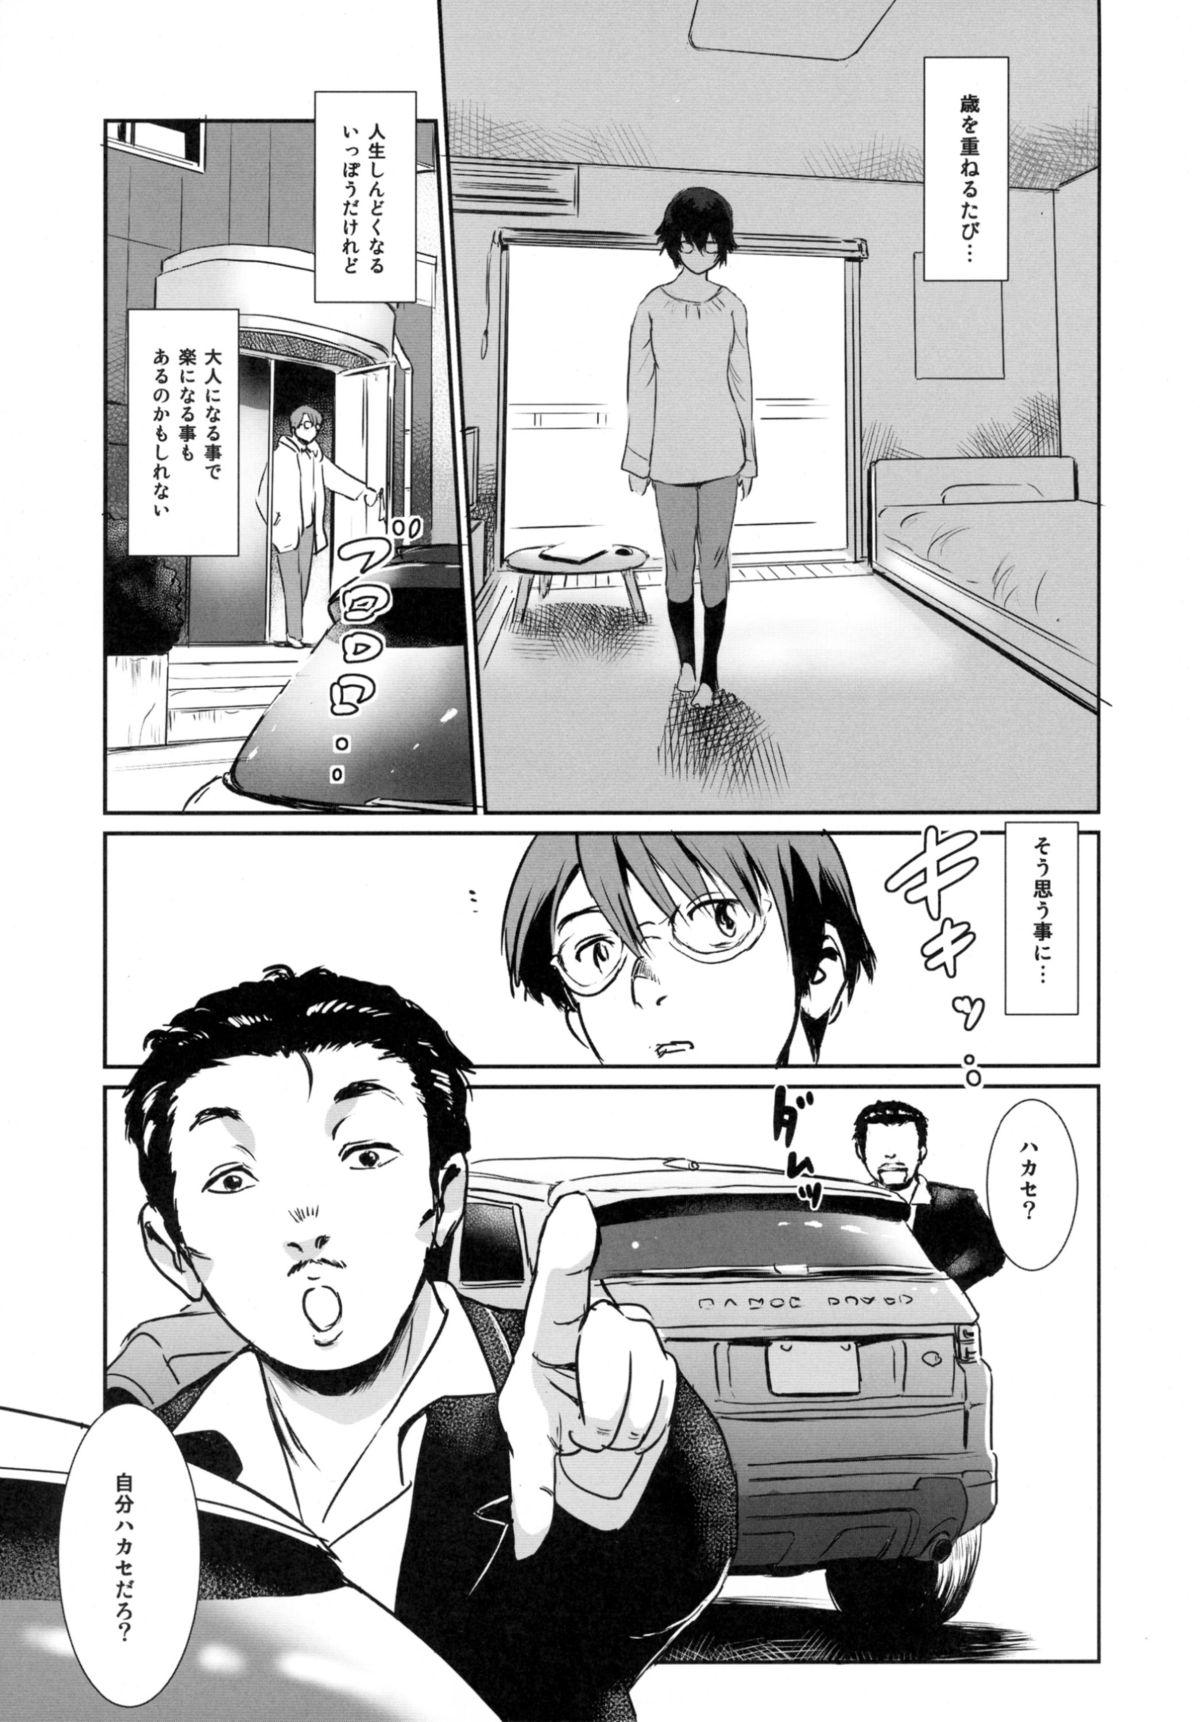 Story of the 'N' Situation - Situation#3 Mukashi no Otoko 14